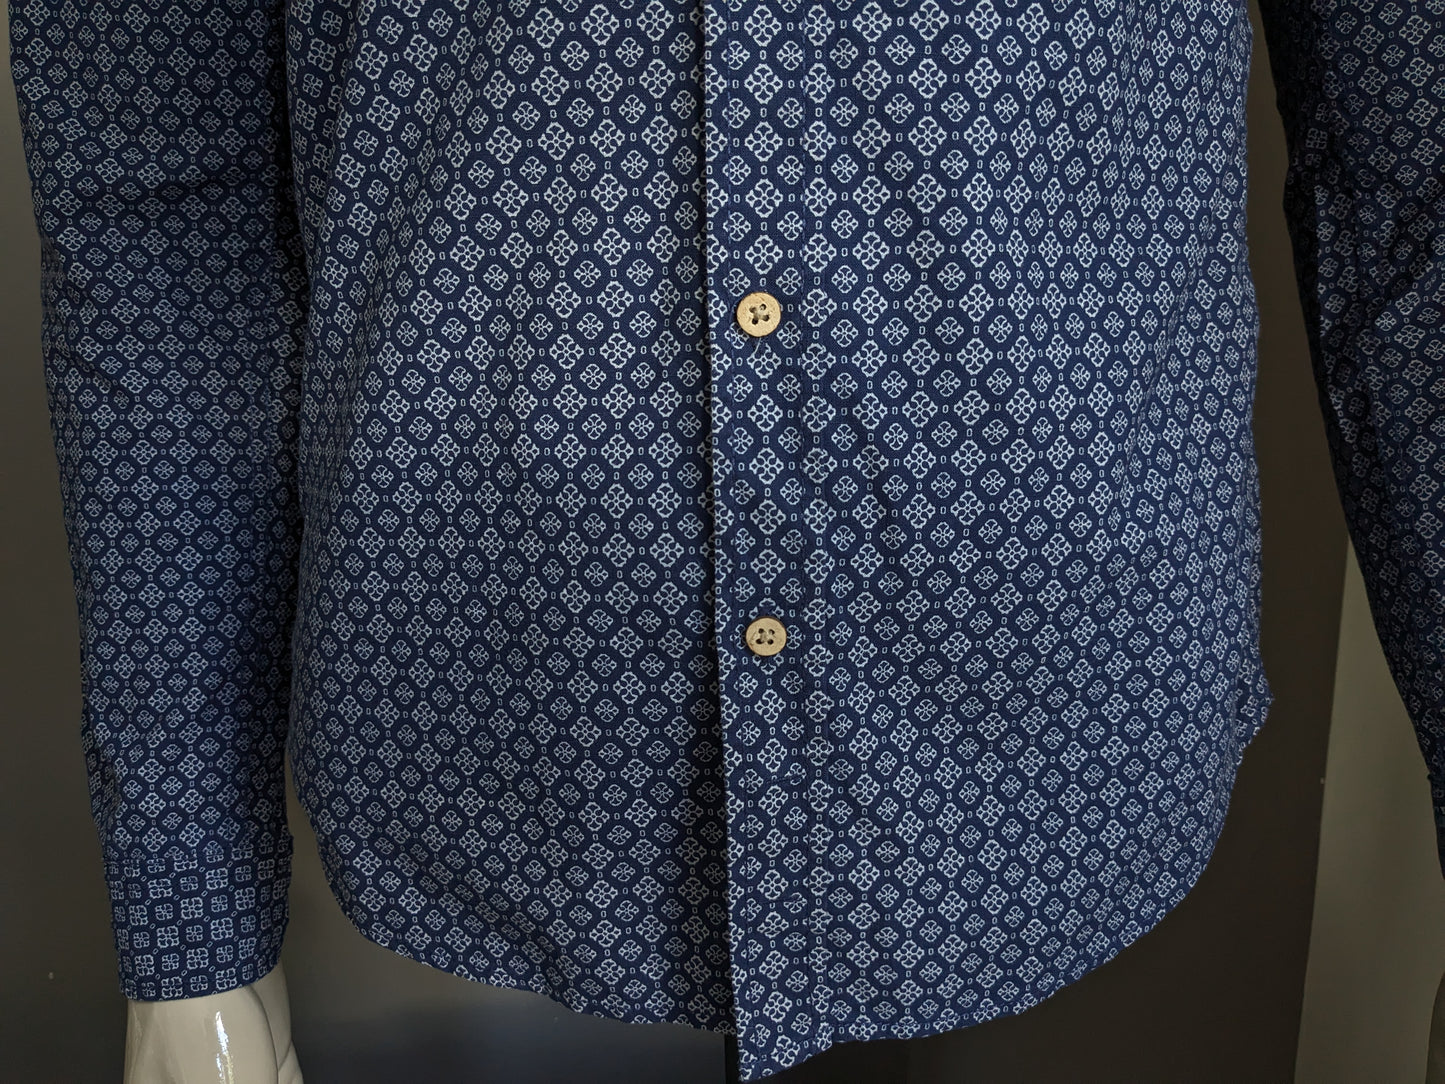 Tom Tailor Denim shirt. Blue white print. Size S.